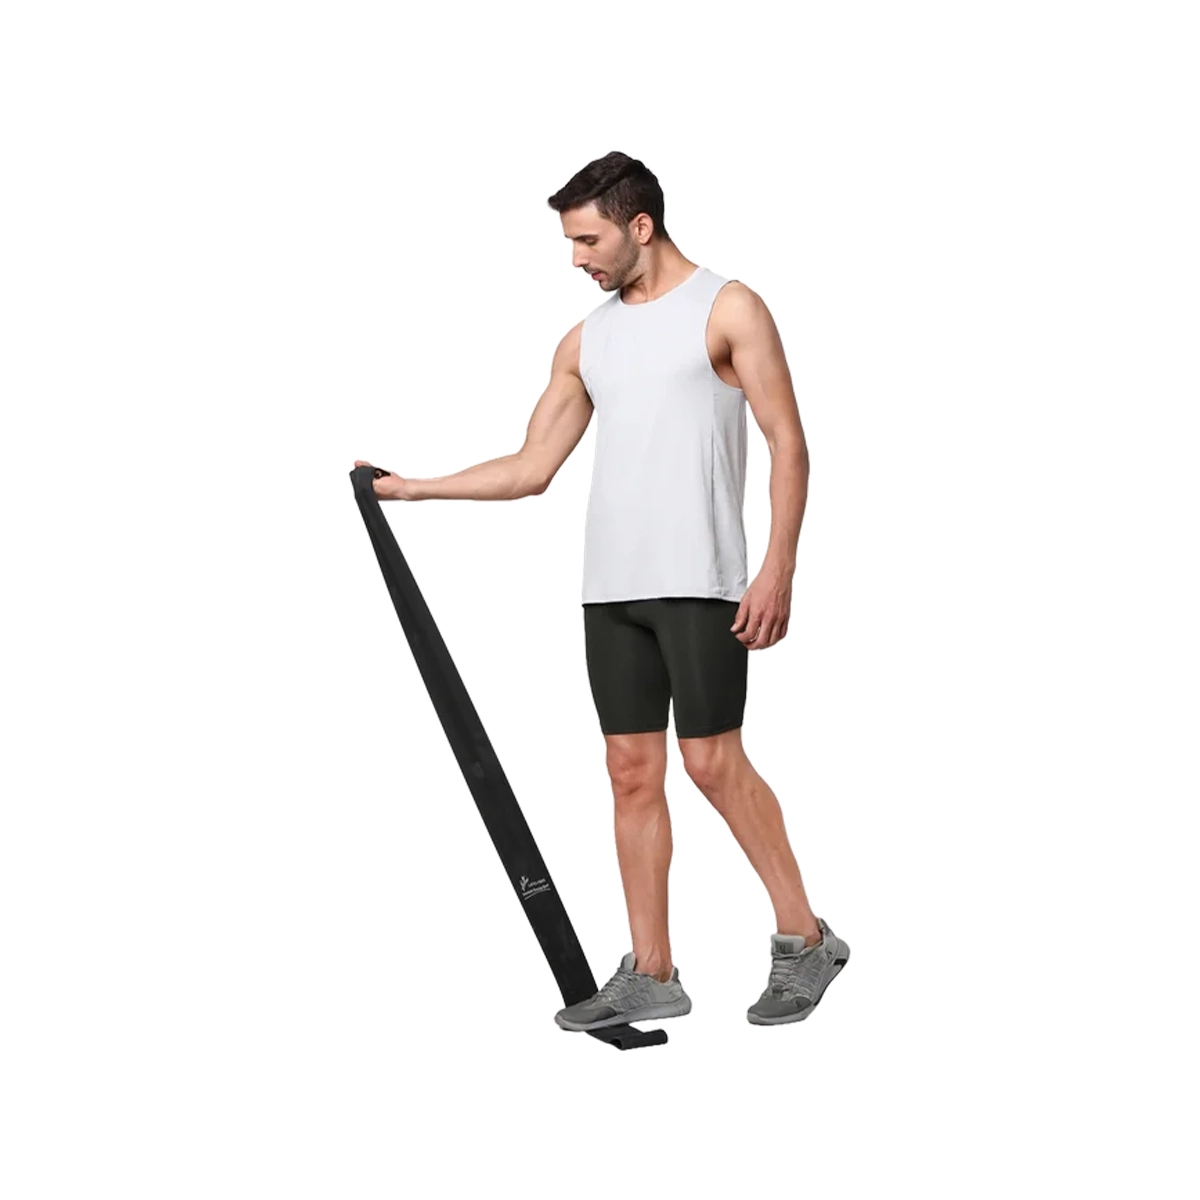 First product image of Flamingo Premium Exercise Band Black OC 2392